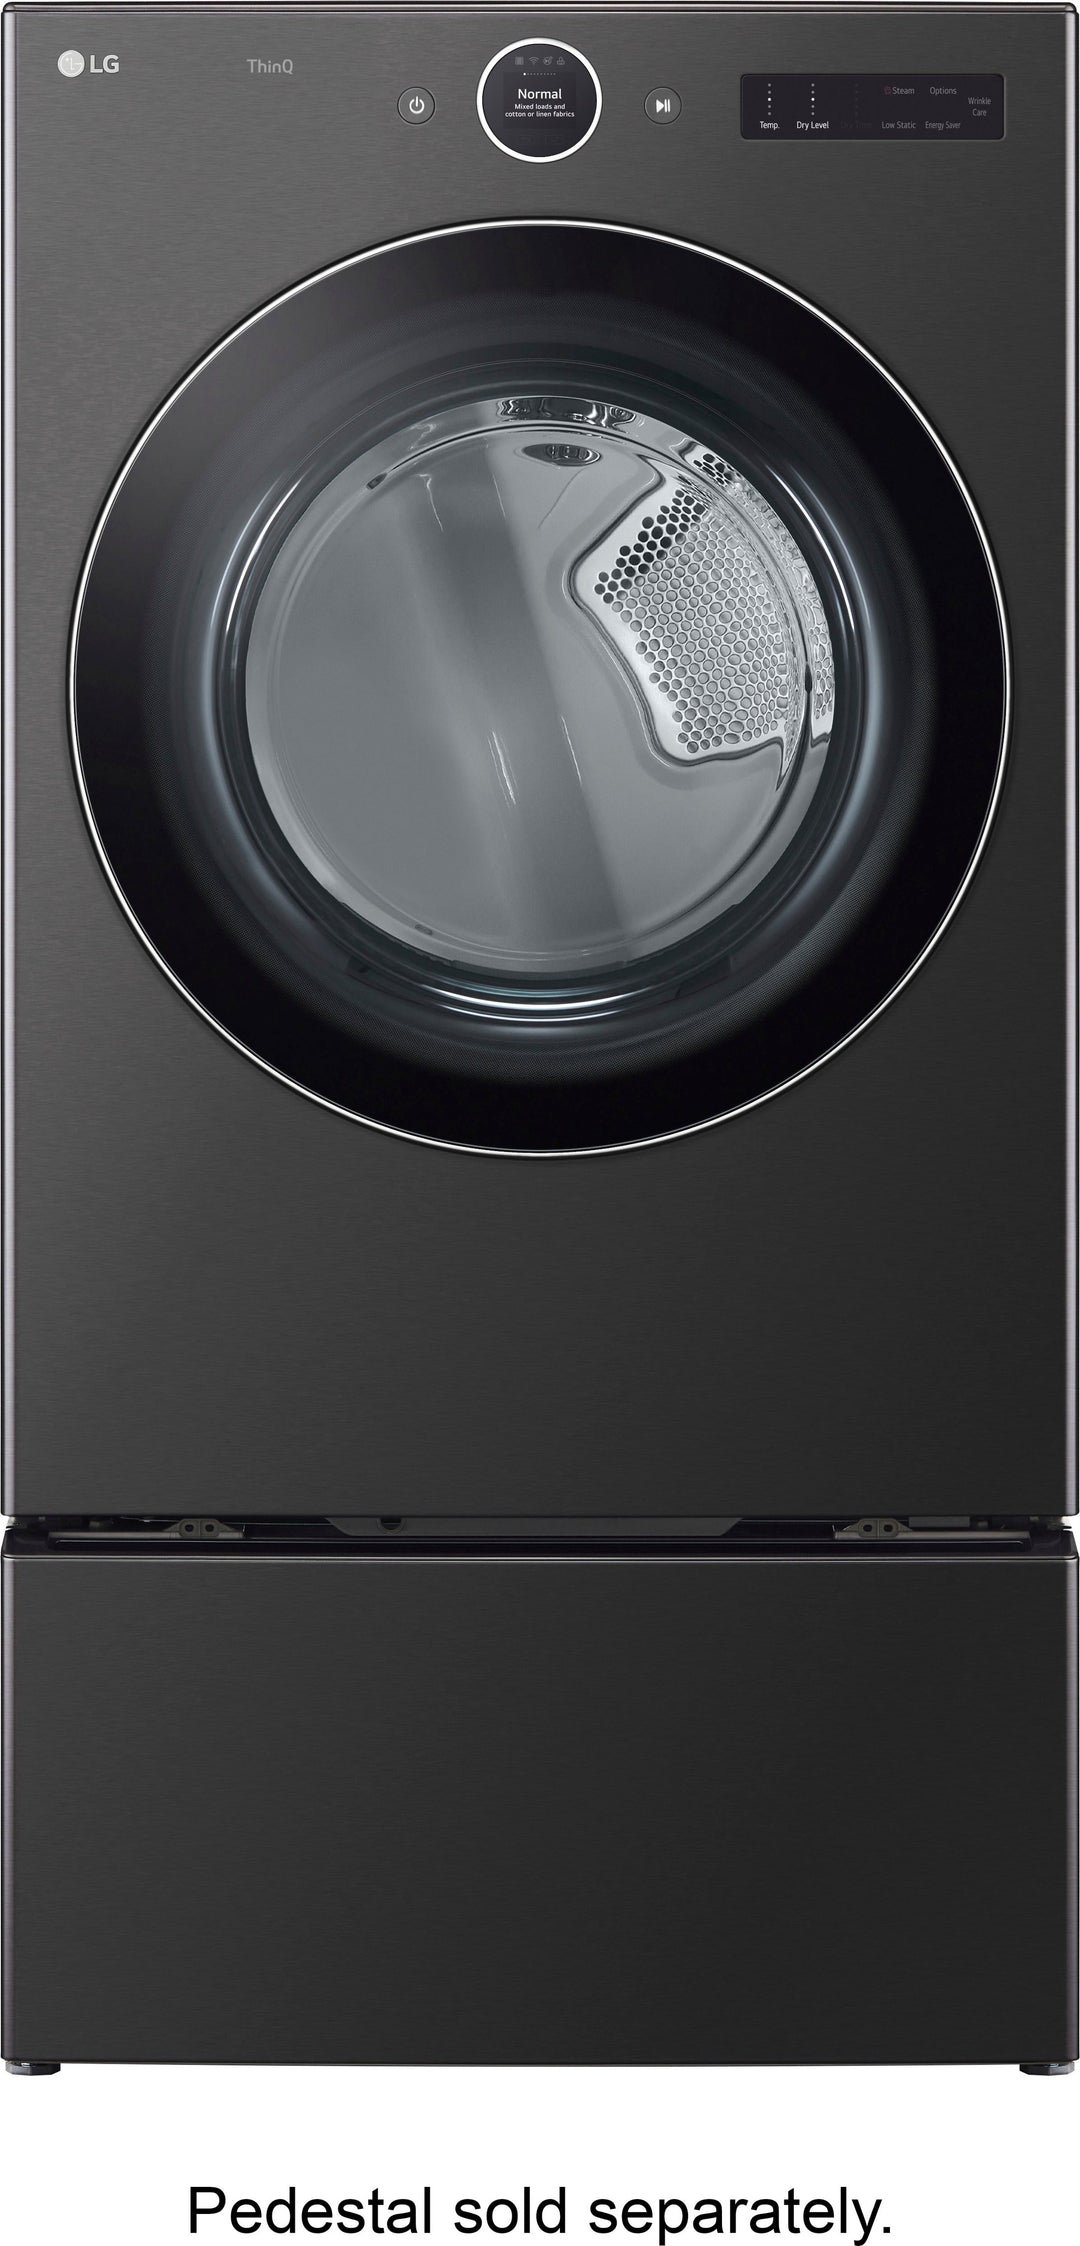 LG - 7.4 Cu. Ft. Stackable Smart Gas Dryer with TurboSteam - Black steel_7